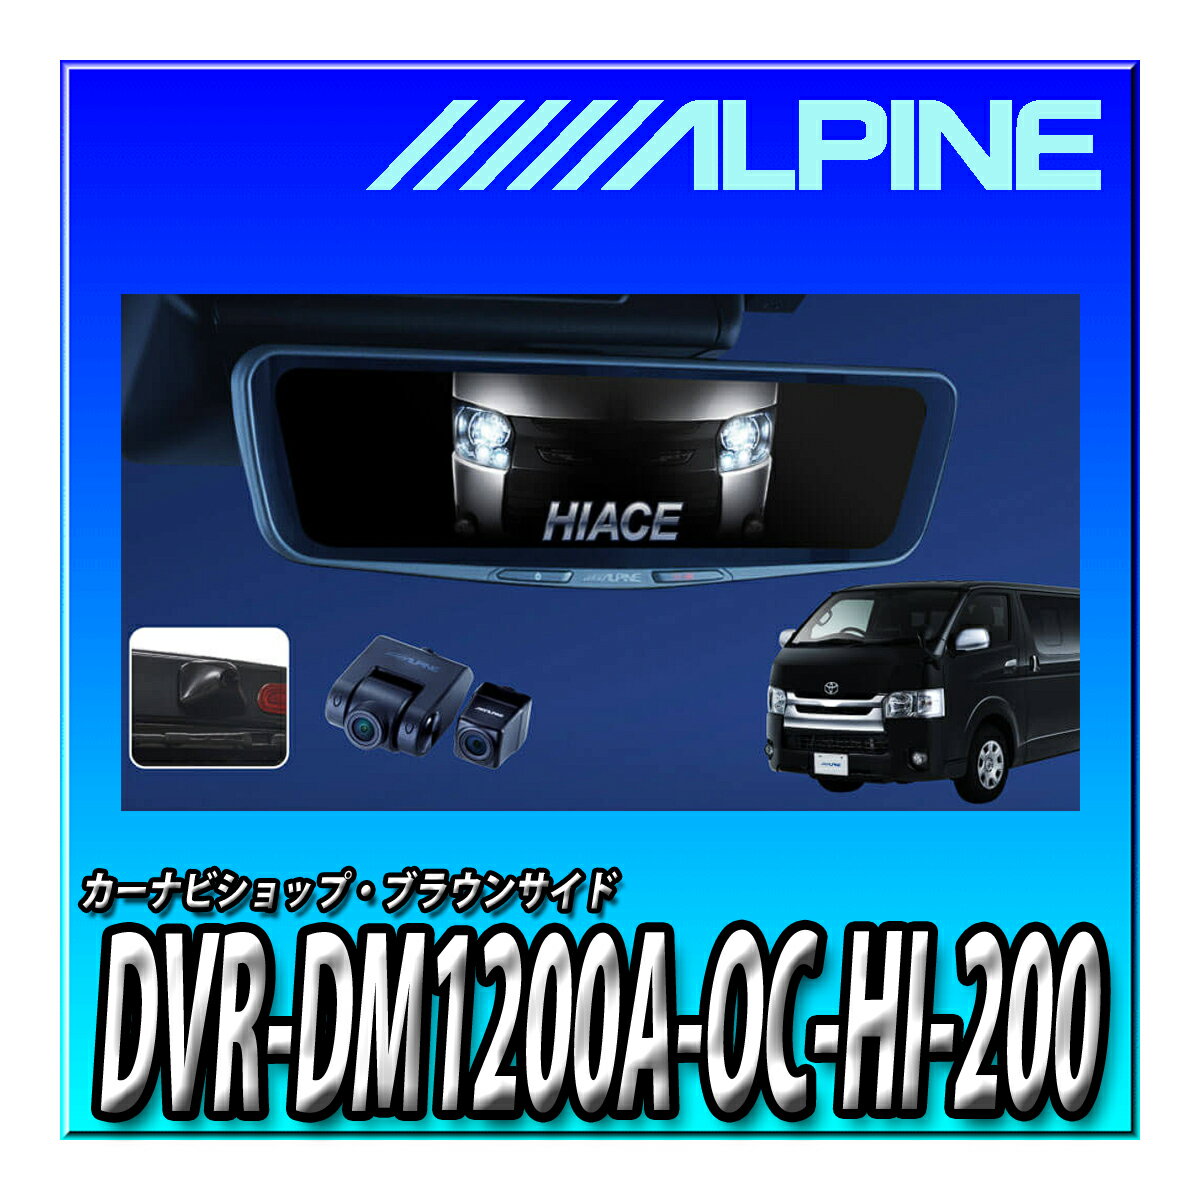 DVR-DM1200A-OC-HI-200 アルパイン(ALPINE) ハイエース(2013.12-現在)専用 ドライブレコーダー搭載 12..